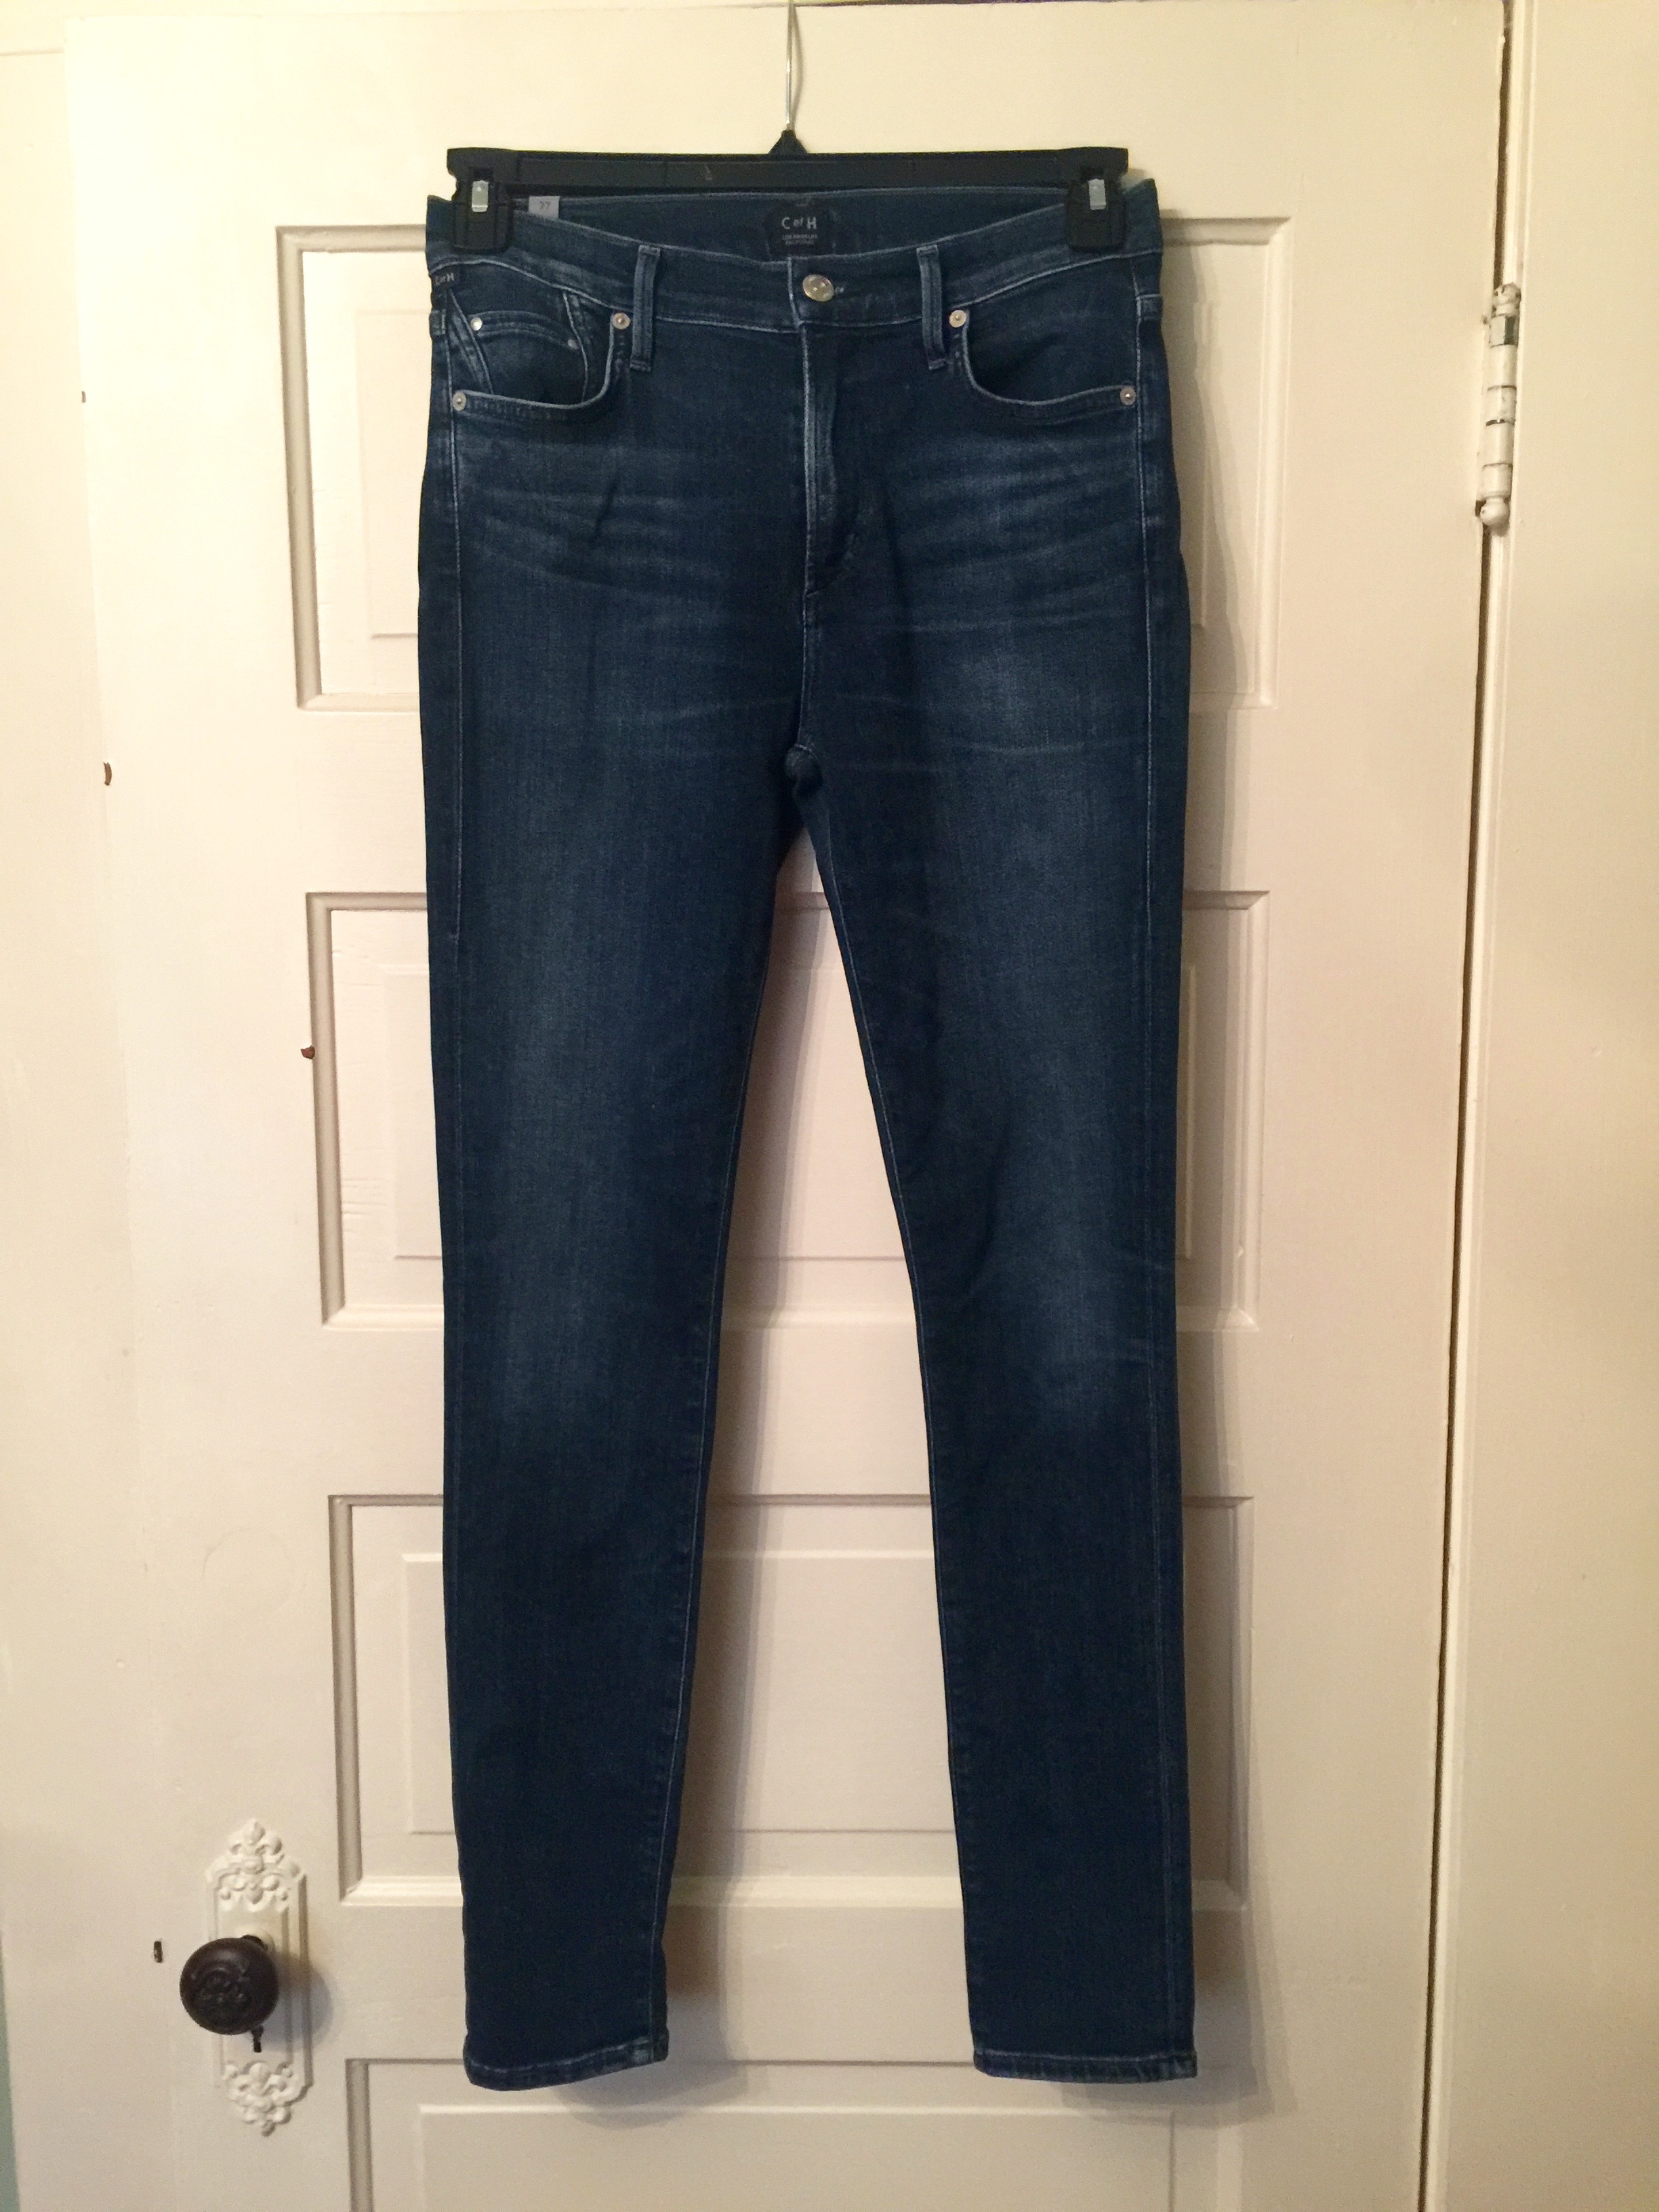 10-item wardrobe jeans